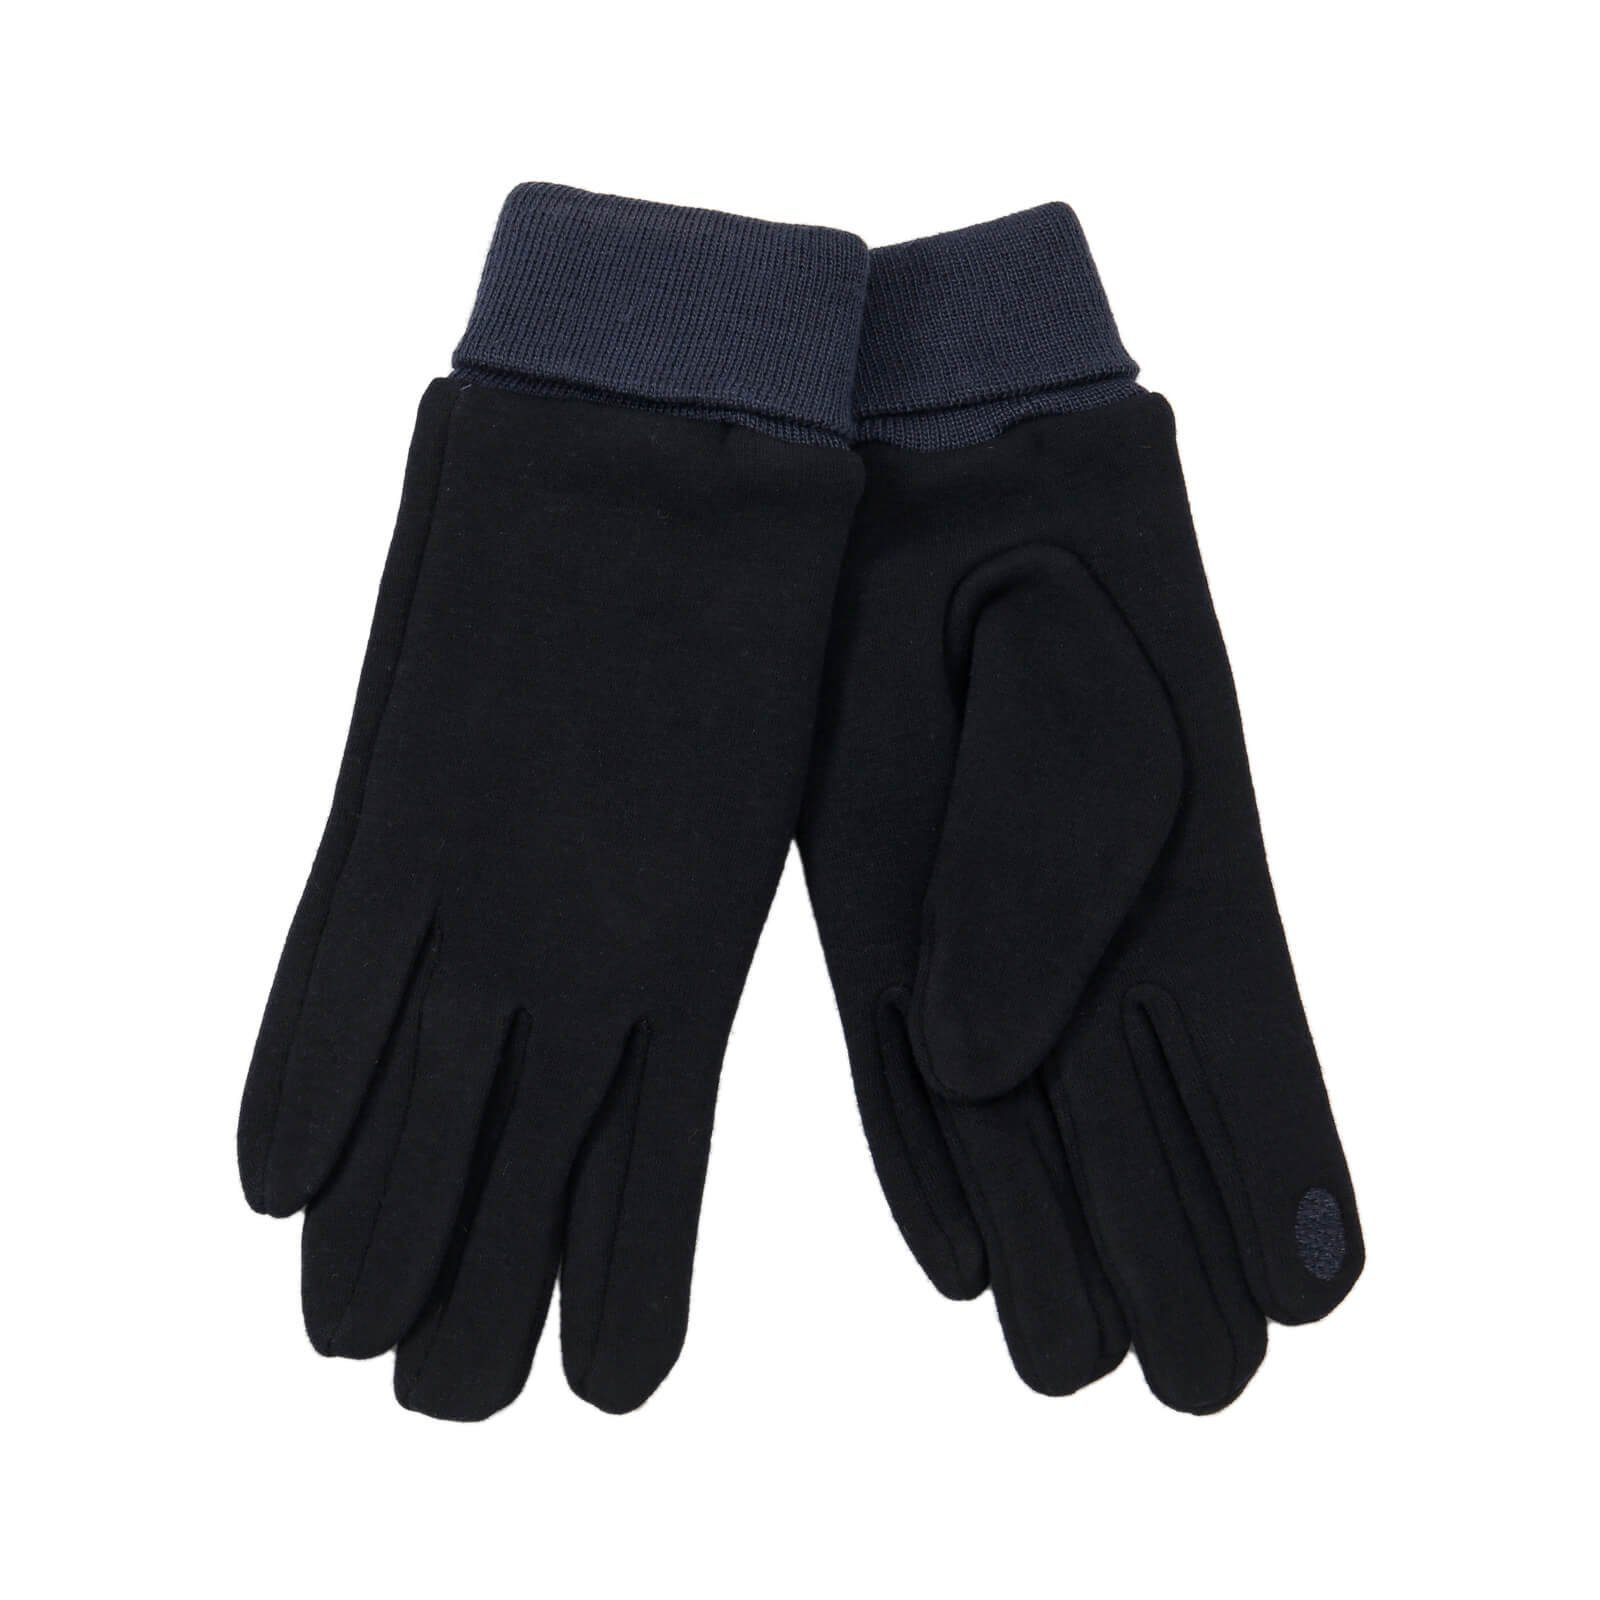 Winterhandschuhe Leoberg verschiedenen Strickmütze 252015-Navy-3 Designs und Handschuhe in Farben Herren